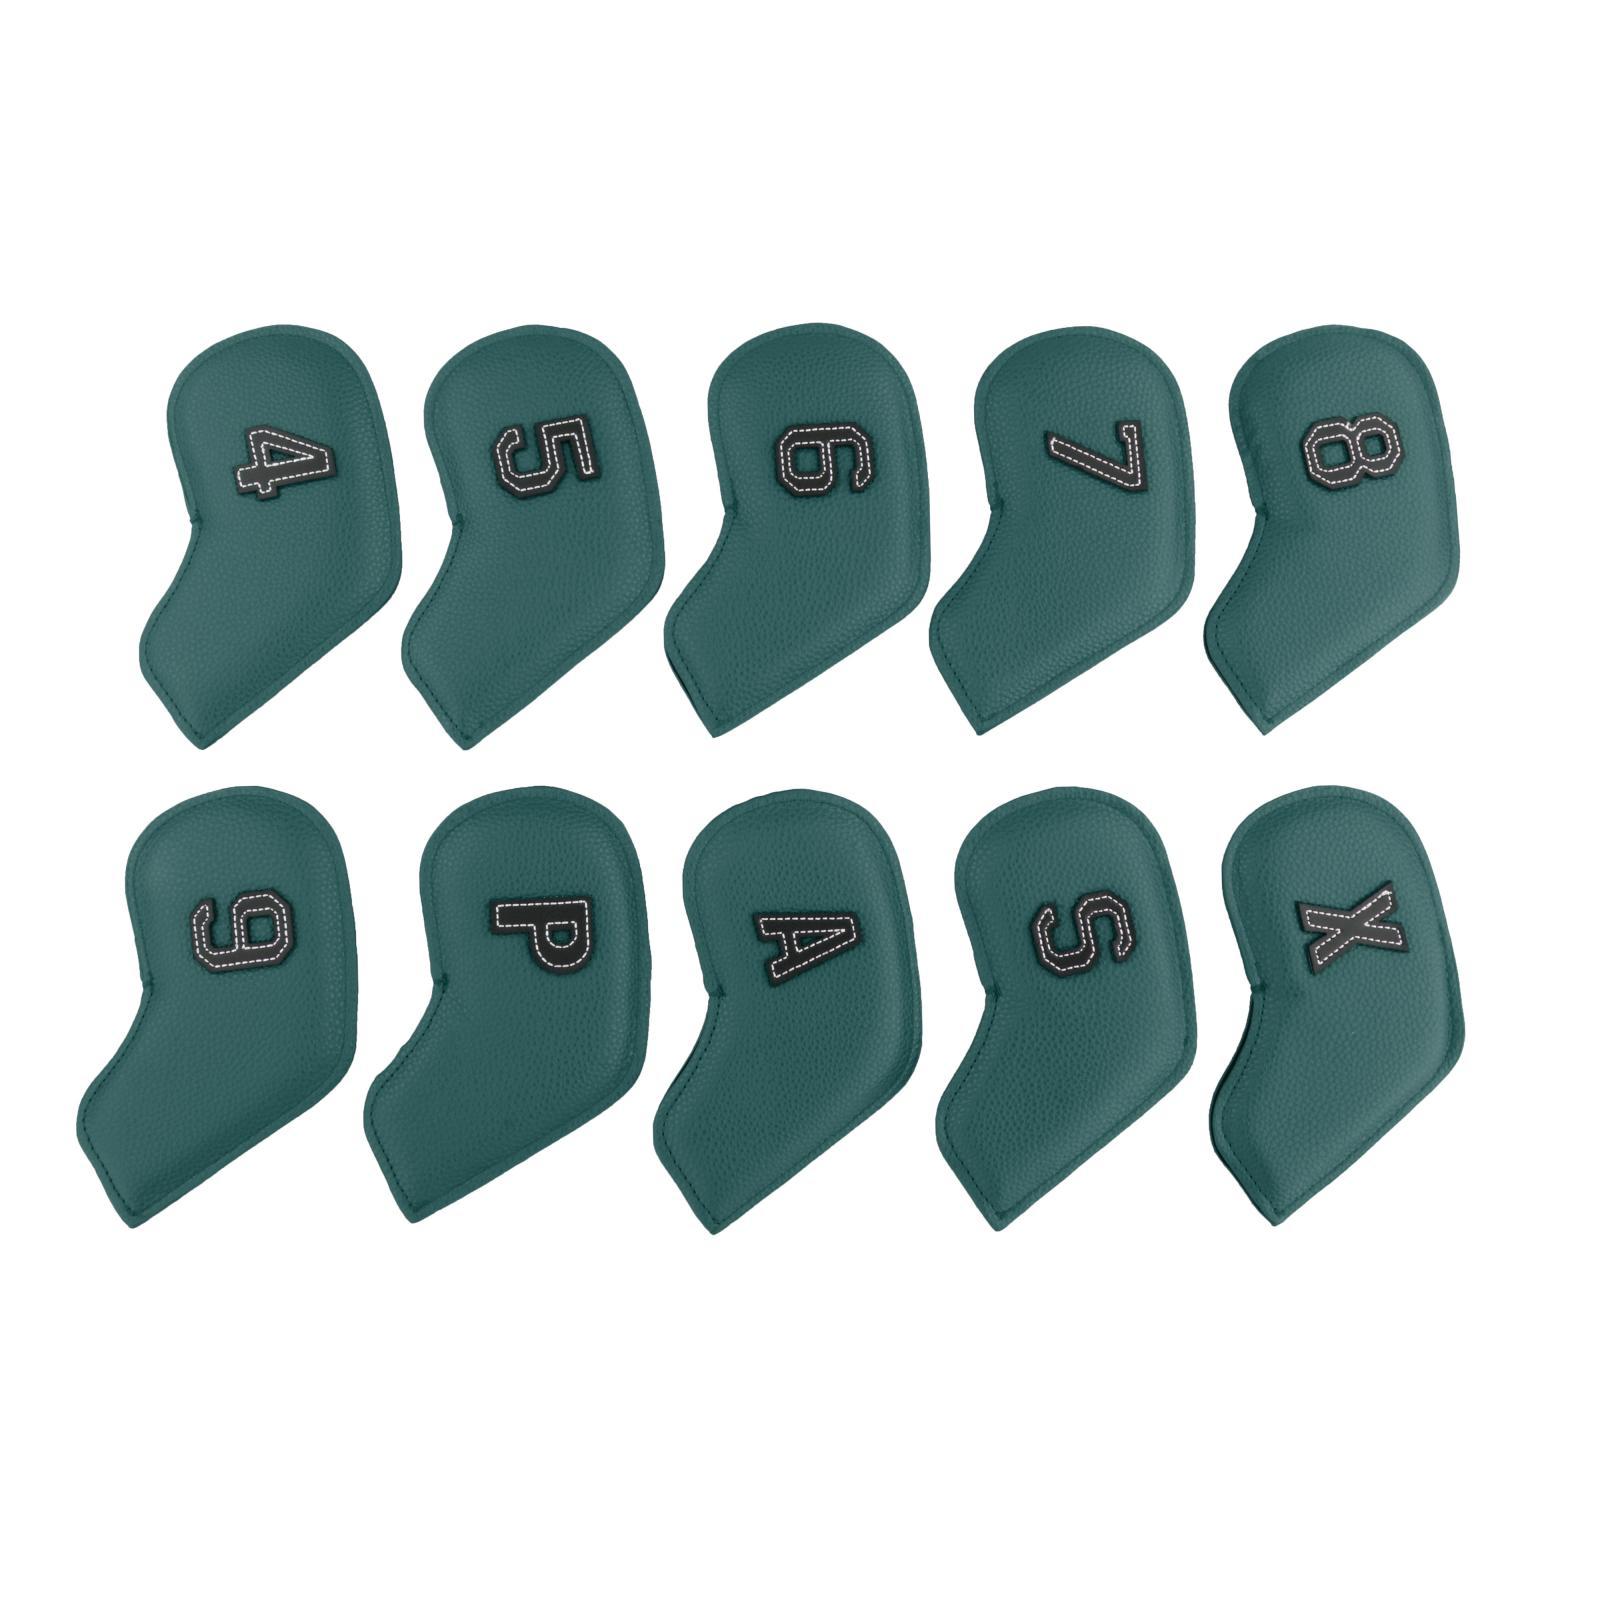 10Pcs Golf Iron Headcover, 4,5,6,7,8,9,A,S,P,X Fits All Brands Dark Green